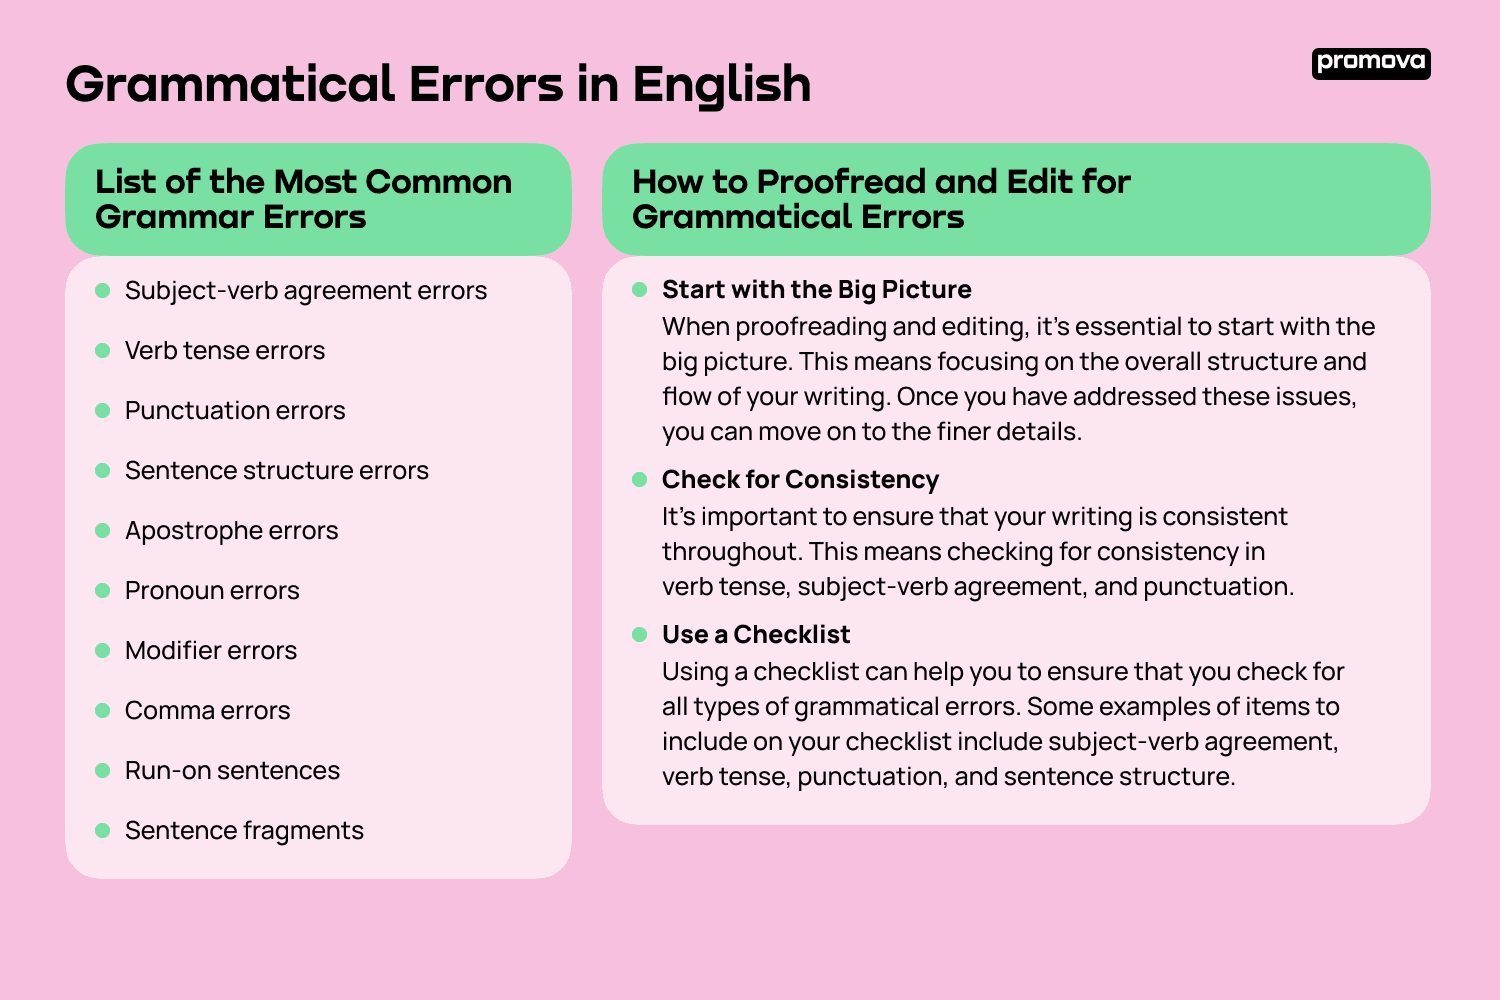 List of the Most Common Grammar Errors